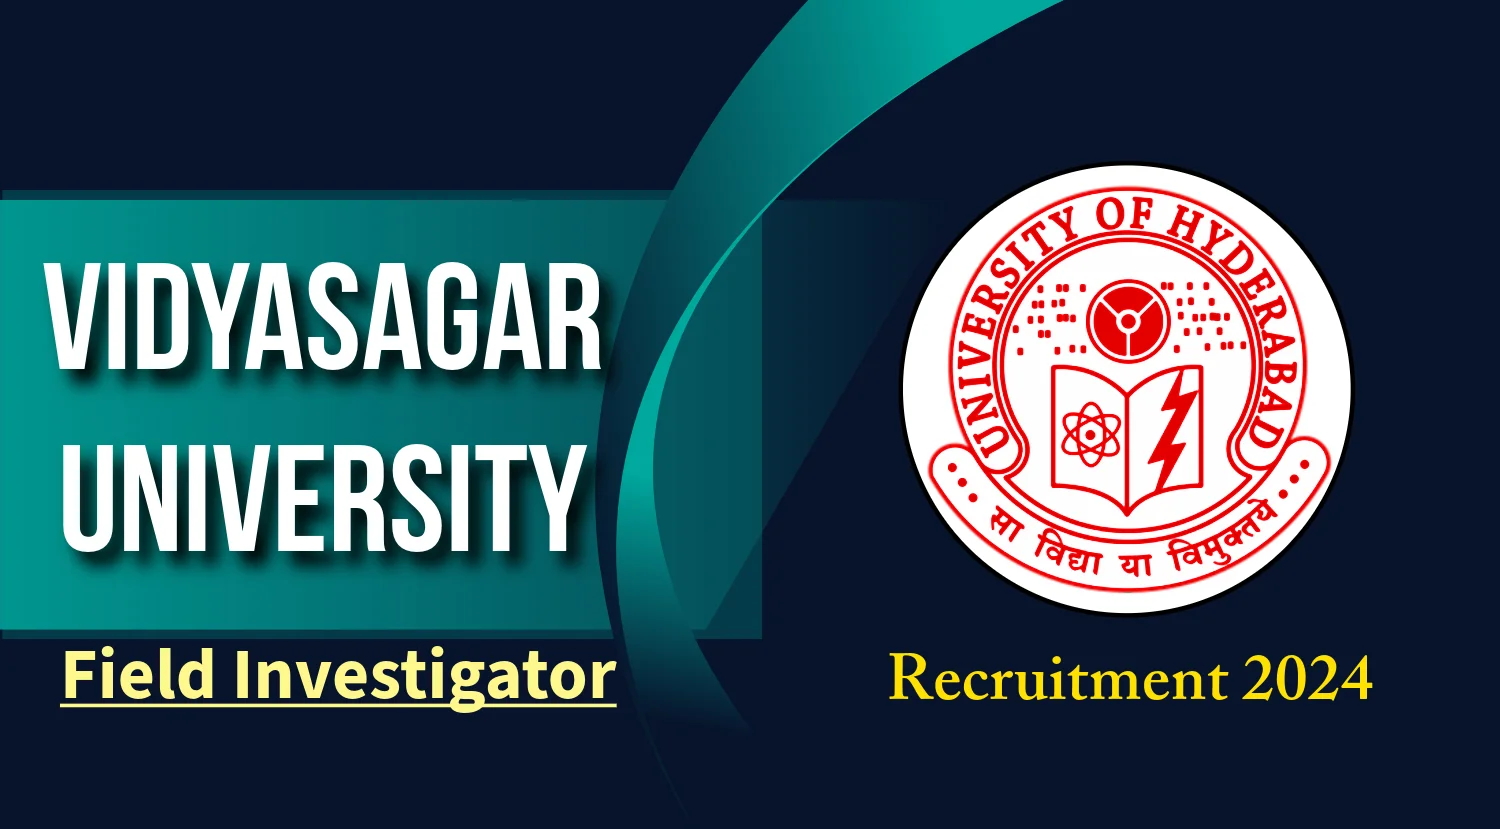 Vidyasagar University Field Investigator Recruitment 2024